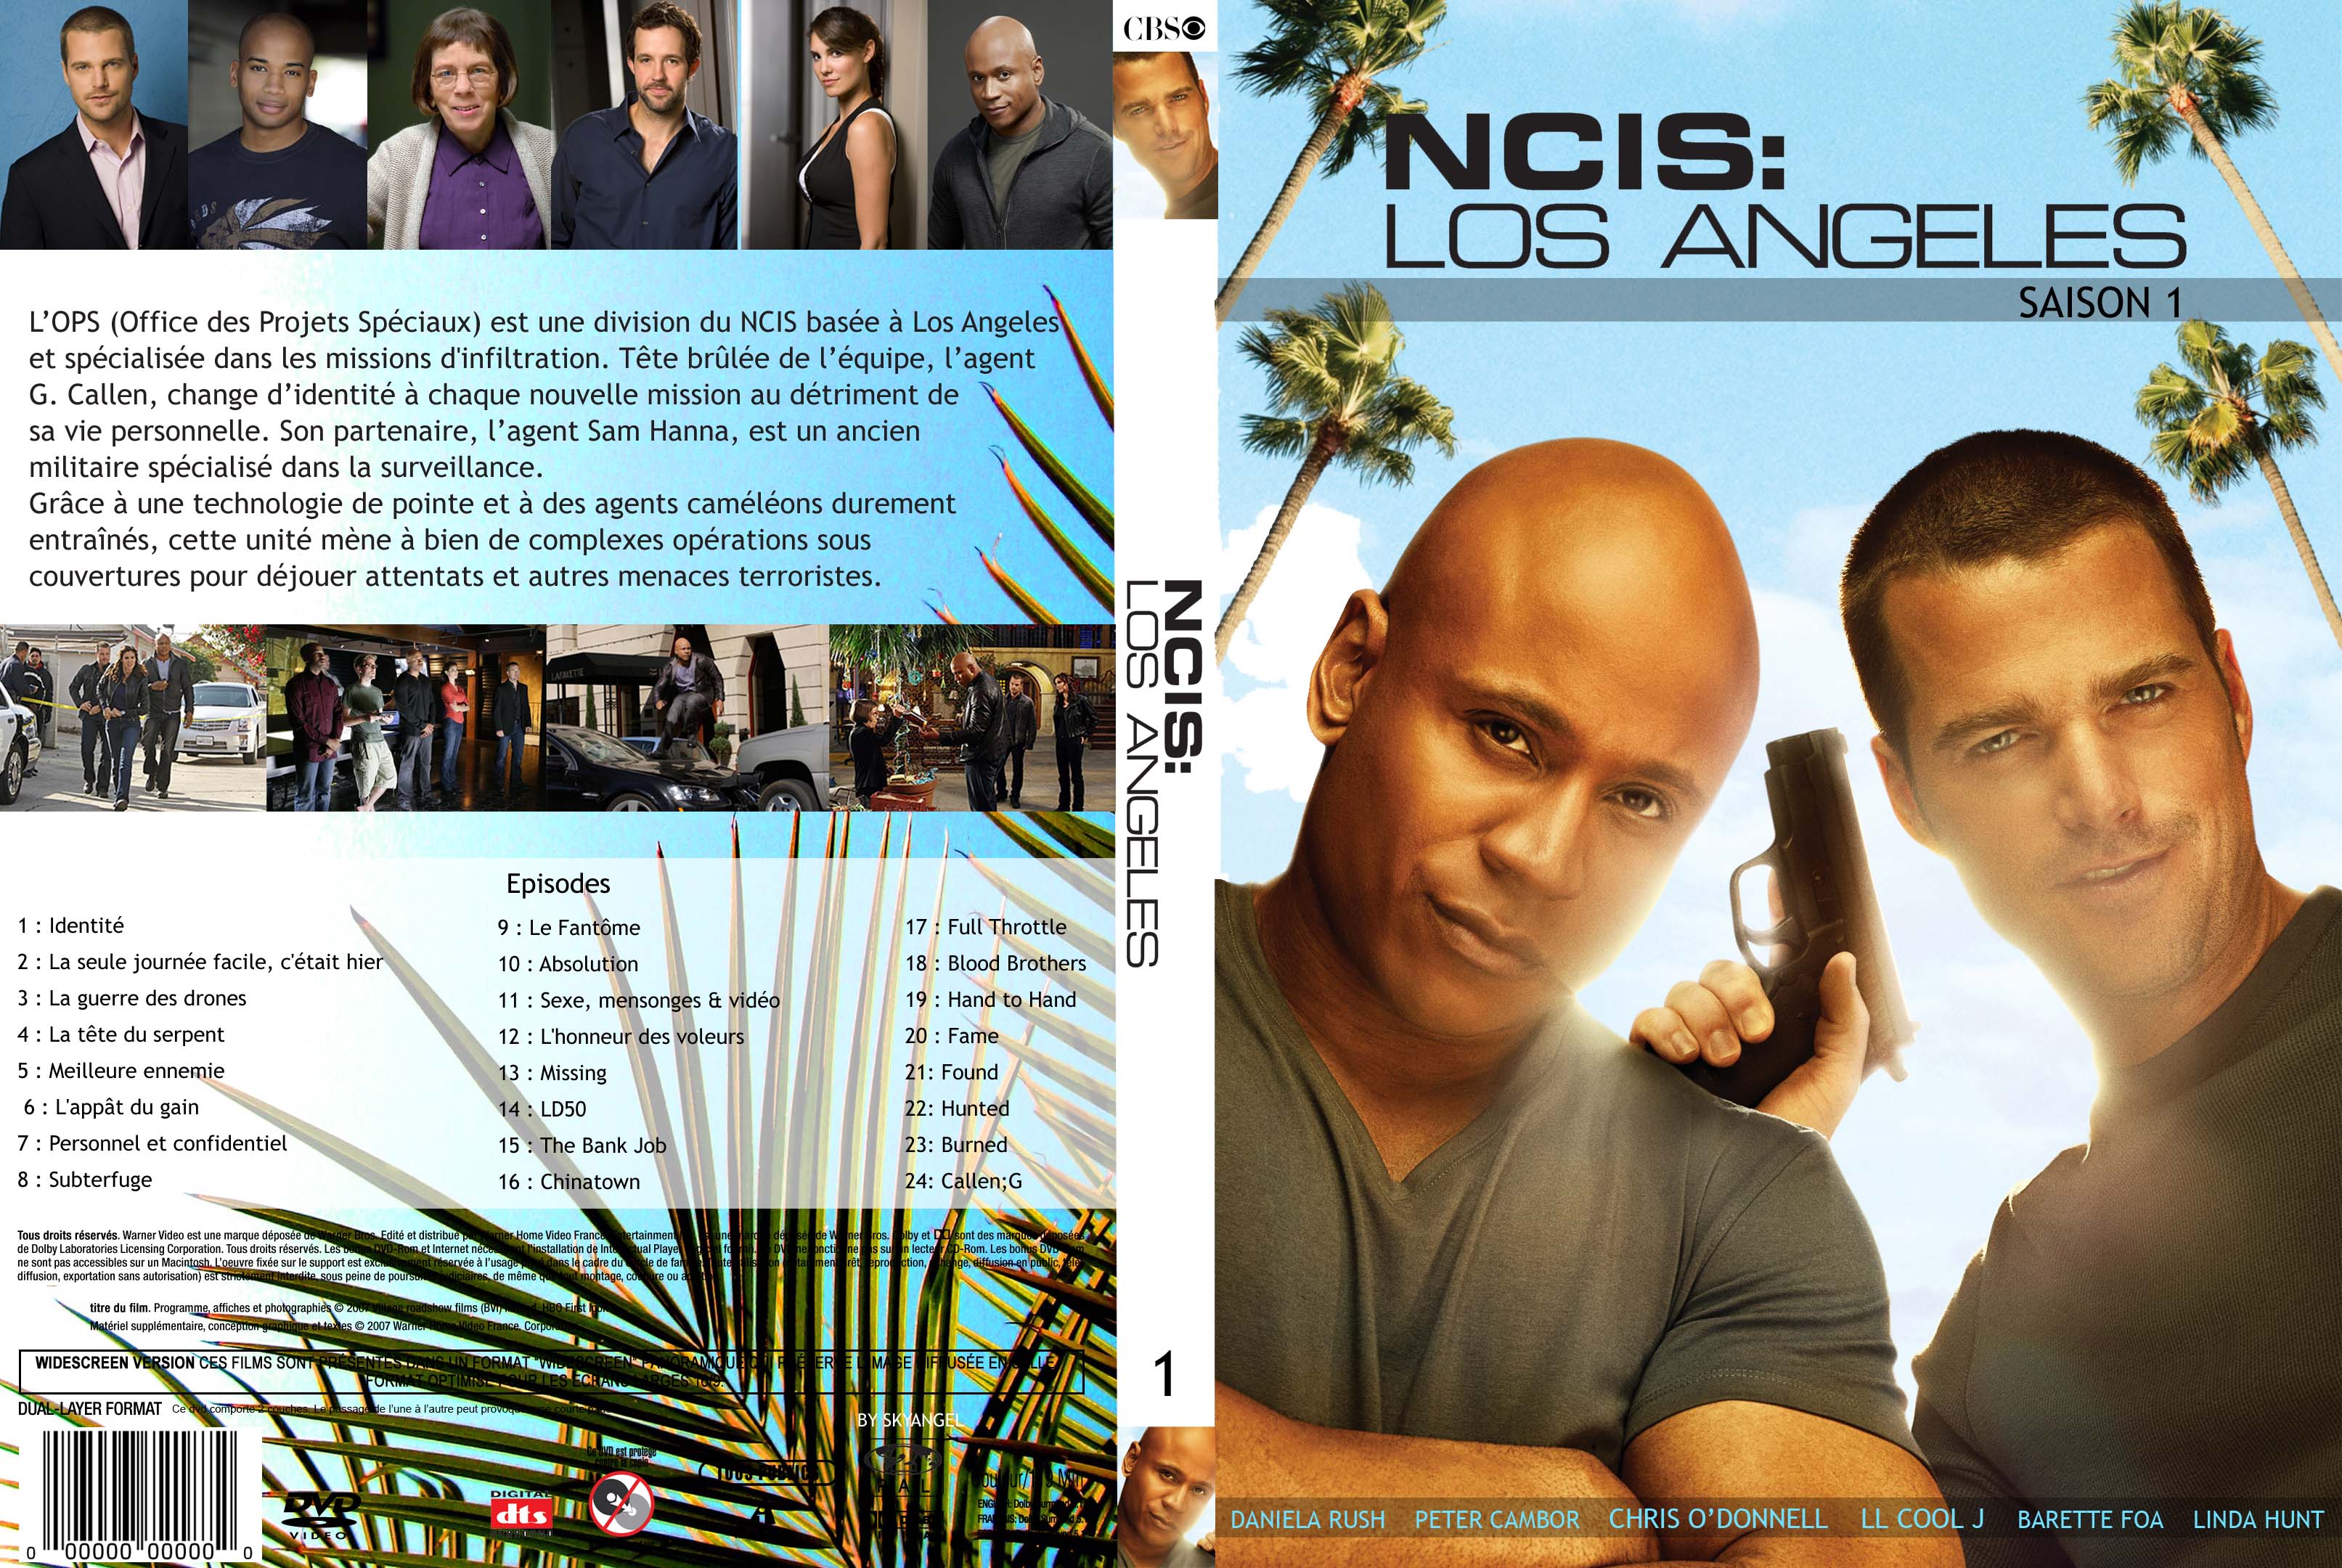 Jaquette DVD NCIS Los Angeles Saison 1 custom